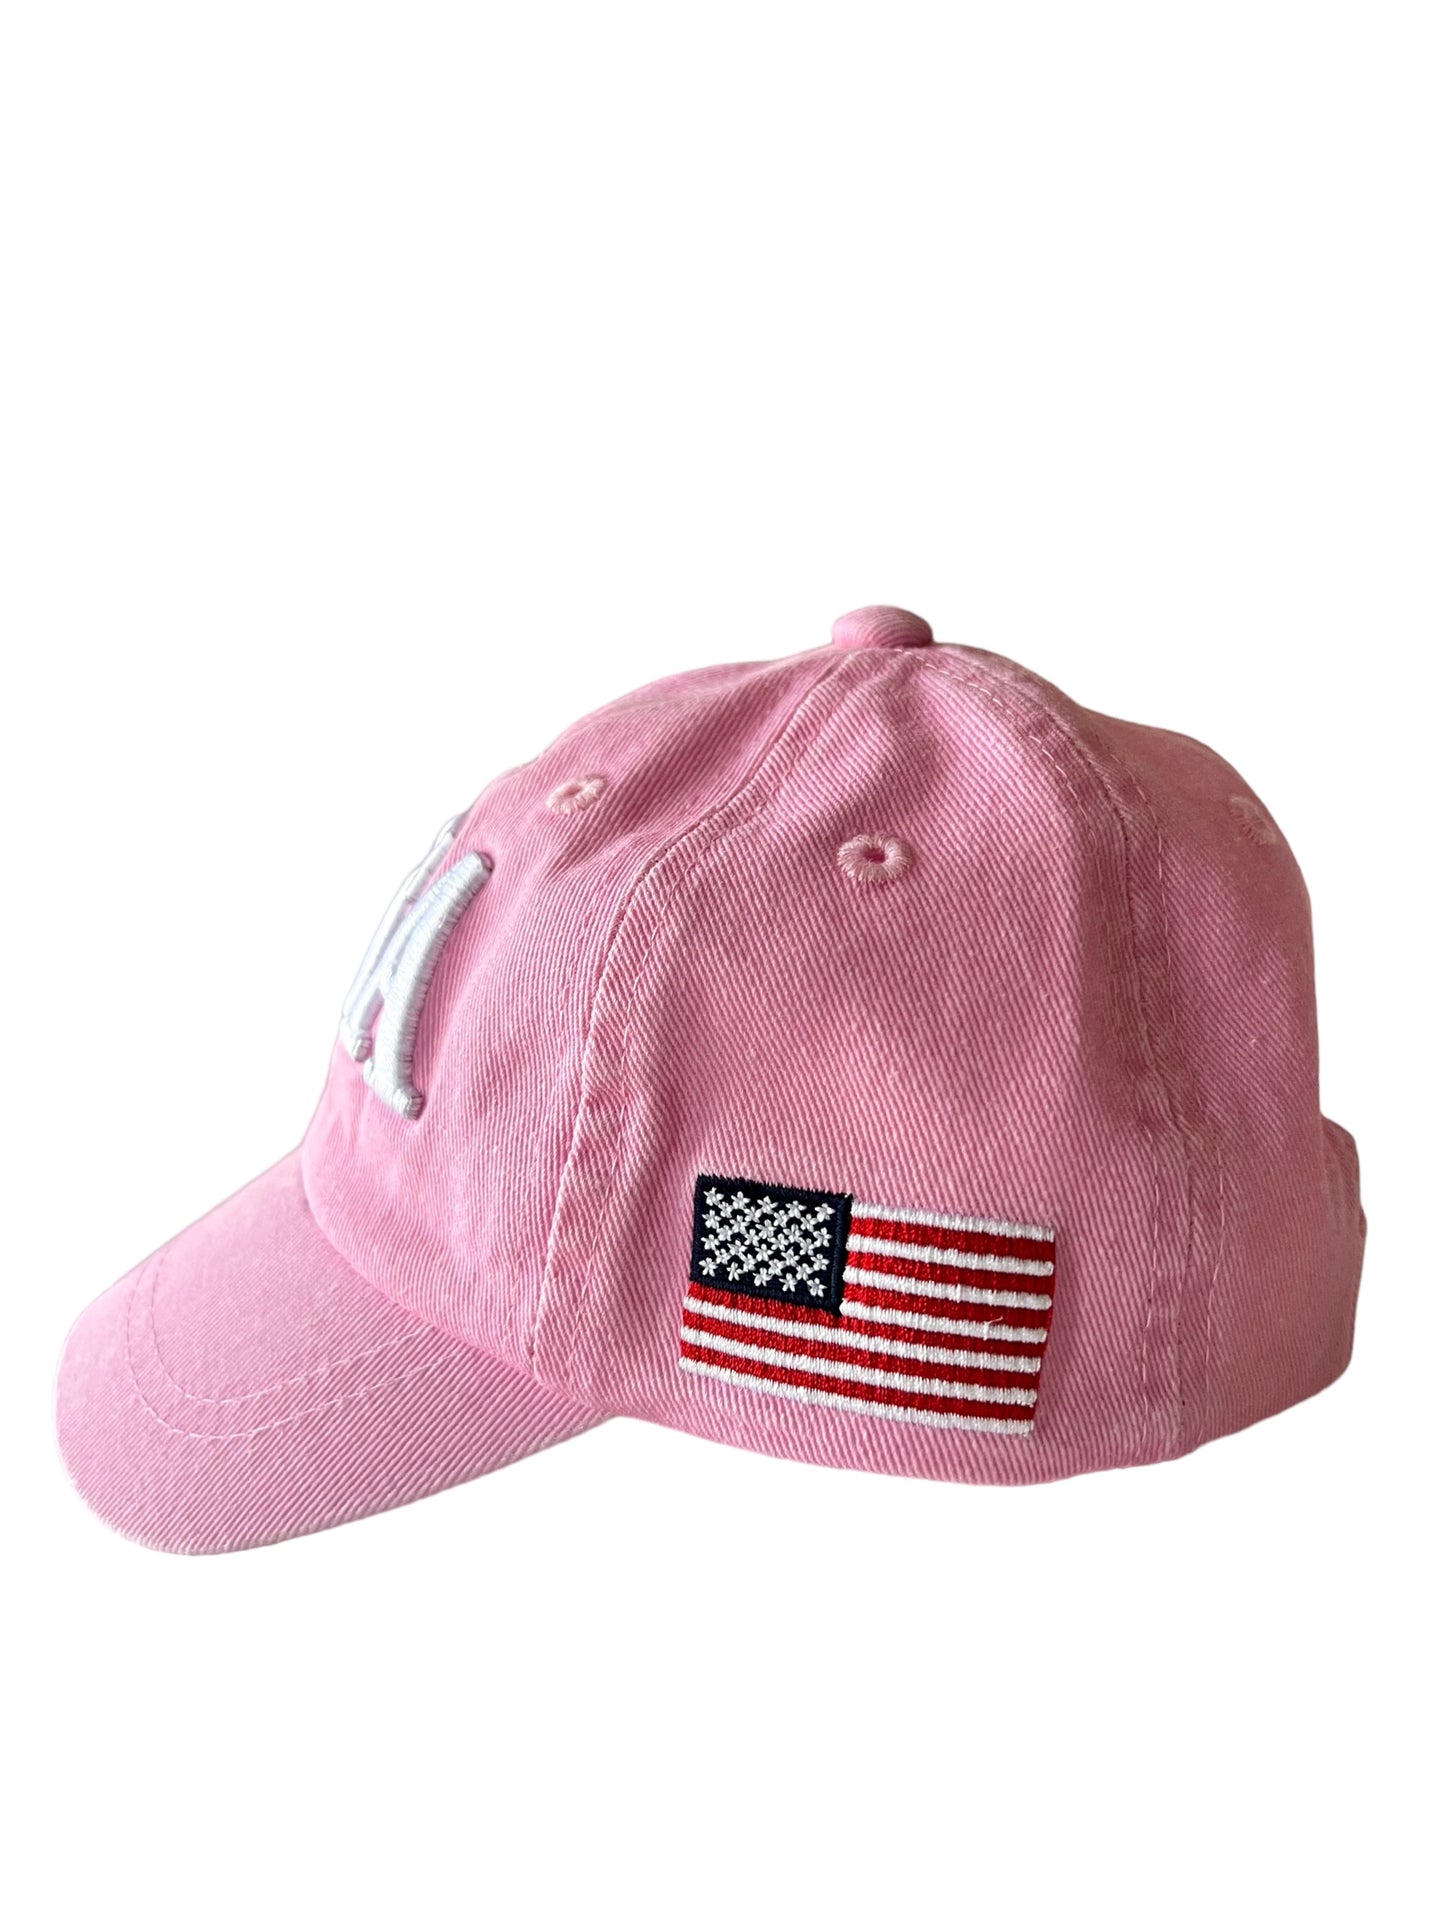 USA Kids Baseball Hat, Vintage Pink